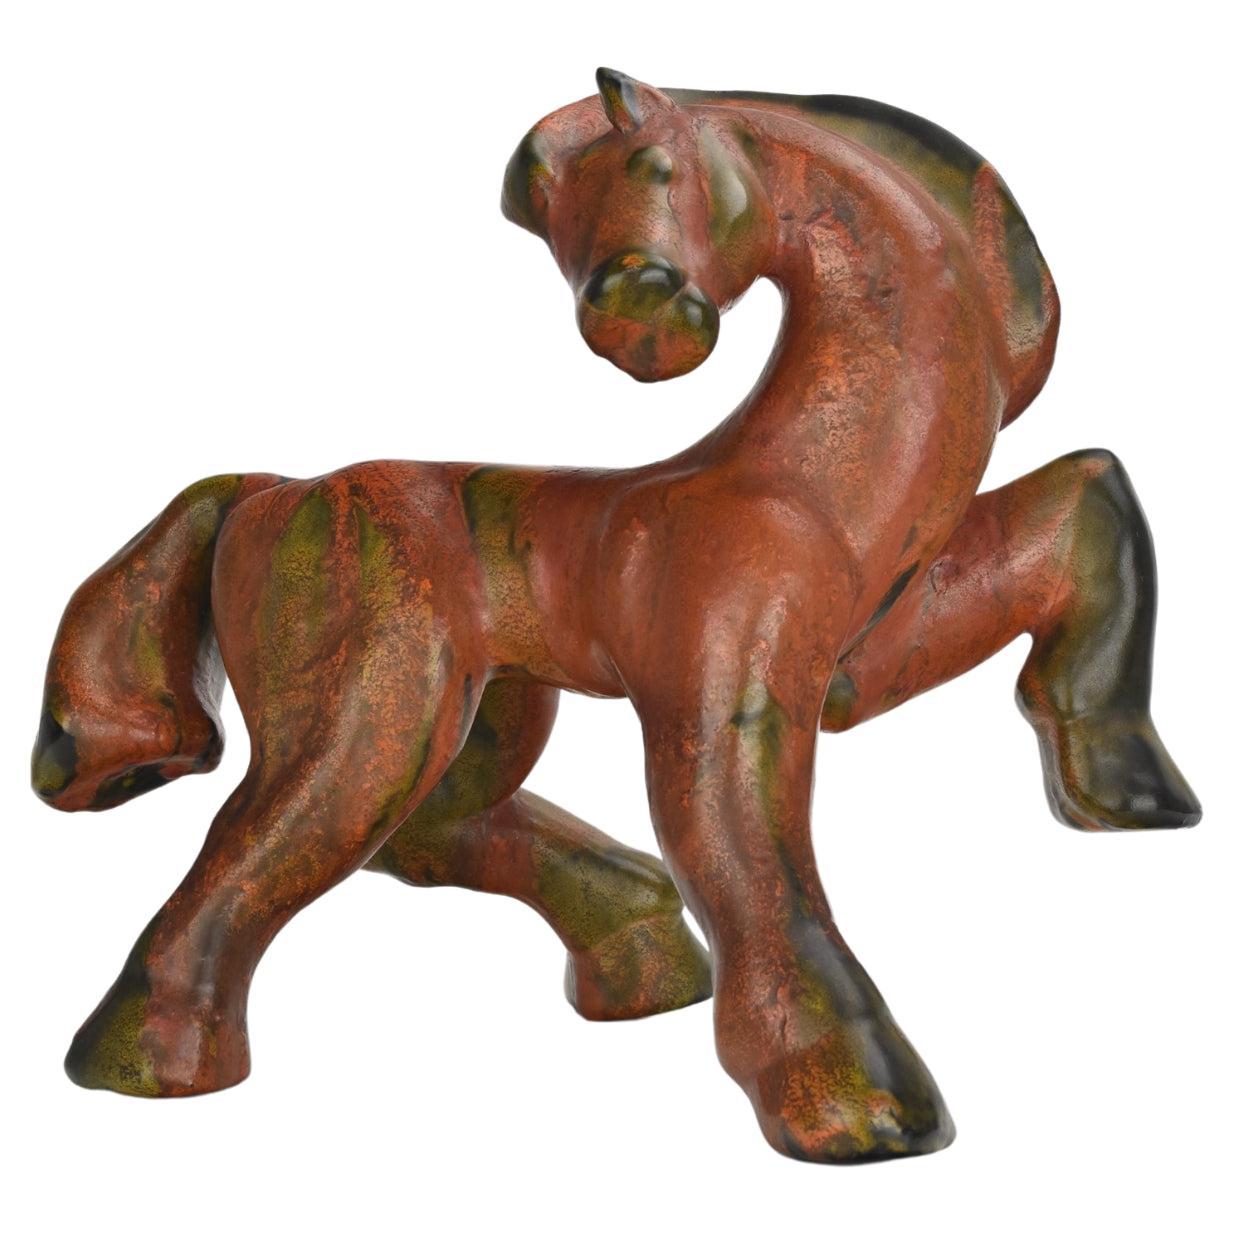 German Art Deco Pottery Ceramic Horse Sculpture Figurine After Franz Marc For Sale